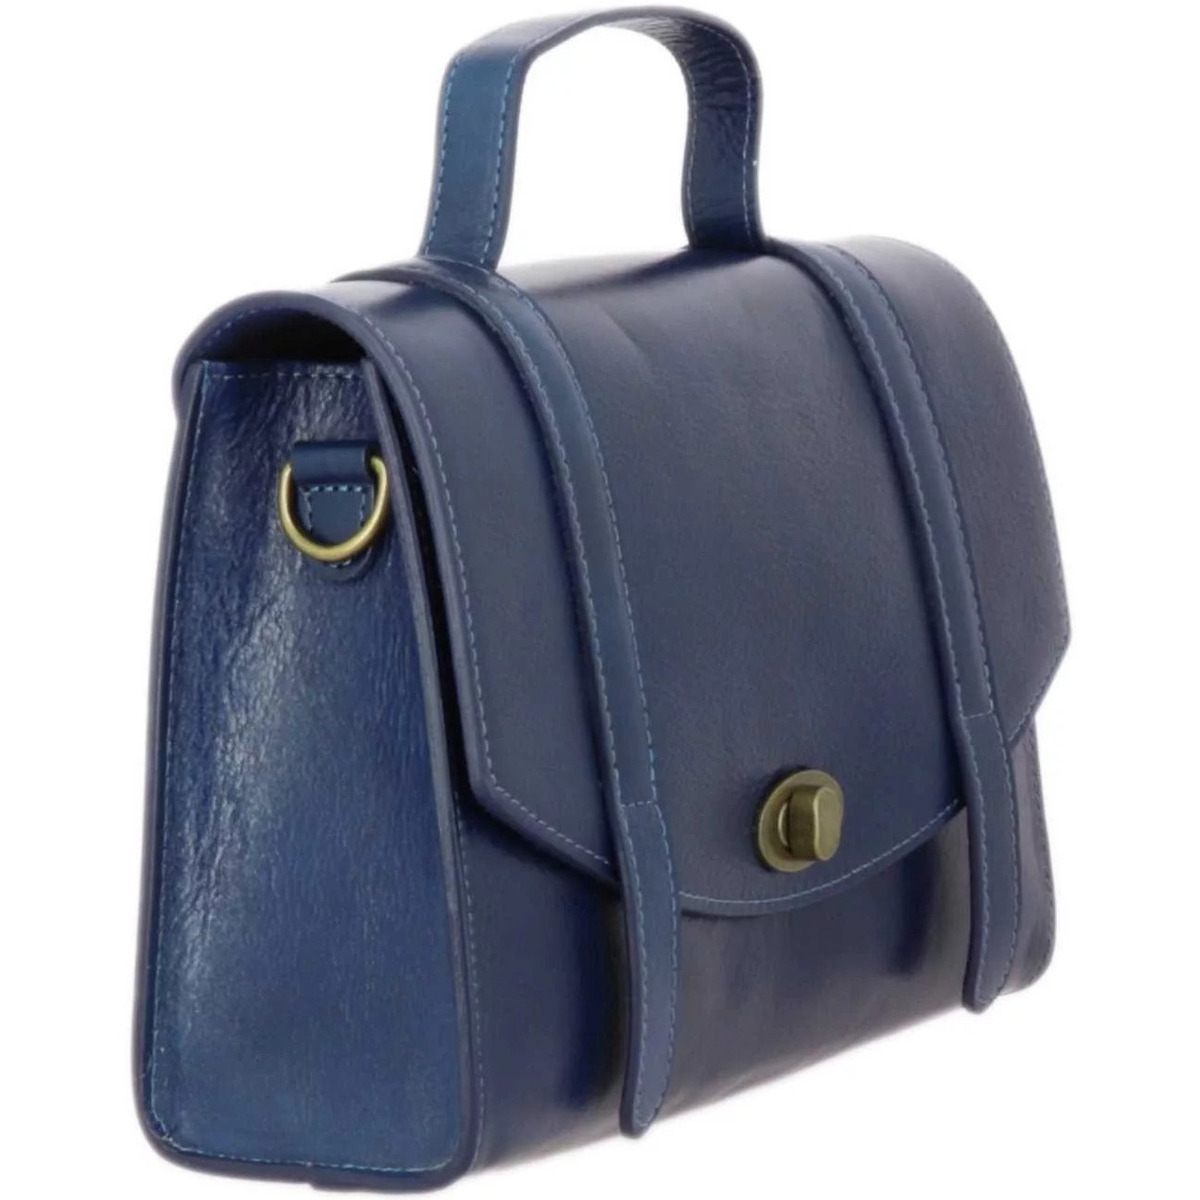 Dupond Durand Bleu YORK sac à main cartable vintage en cuir G4yhz3p8